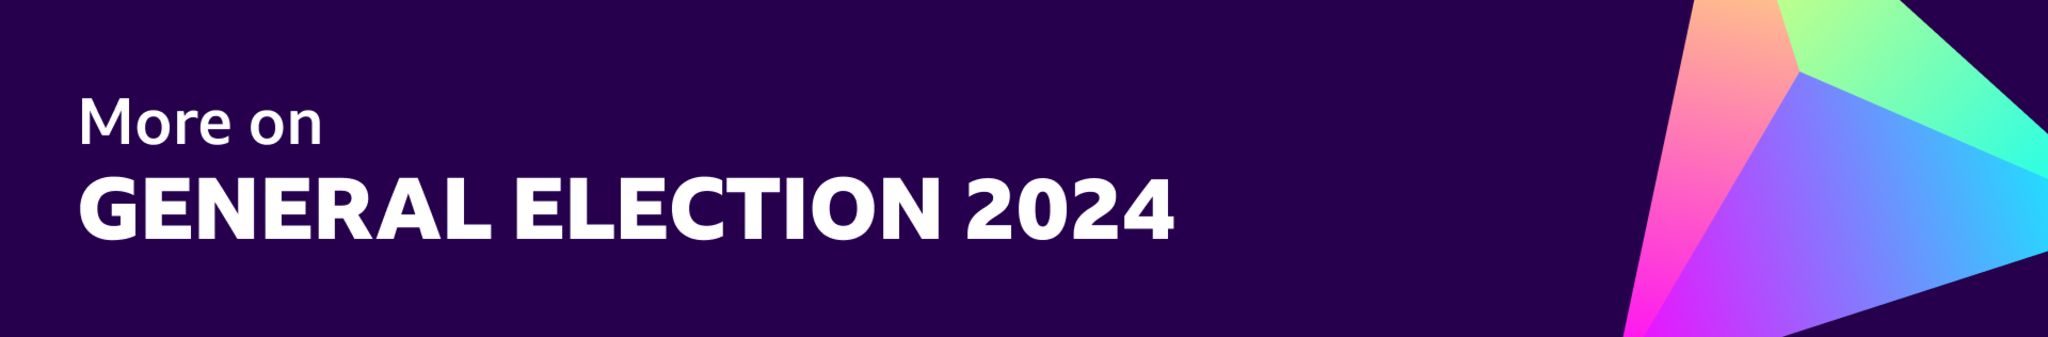 BBC General Election 2024 banner